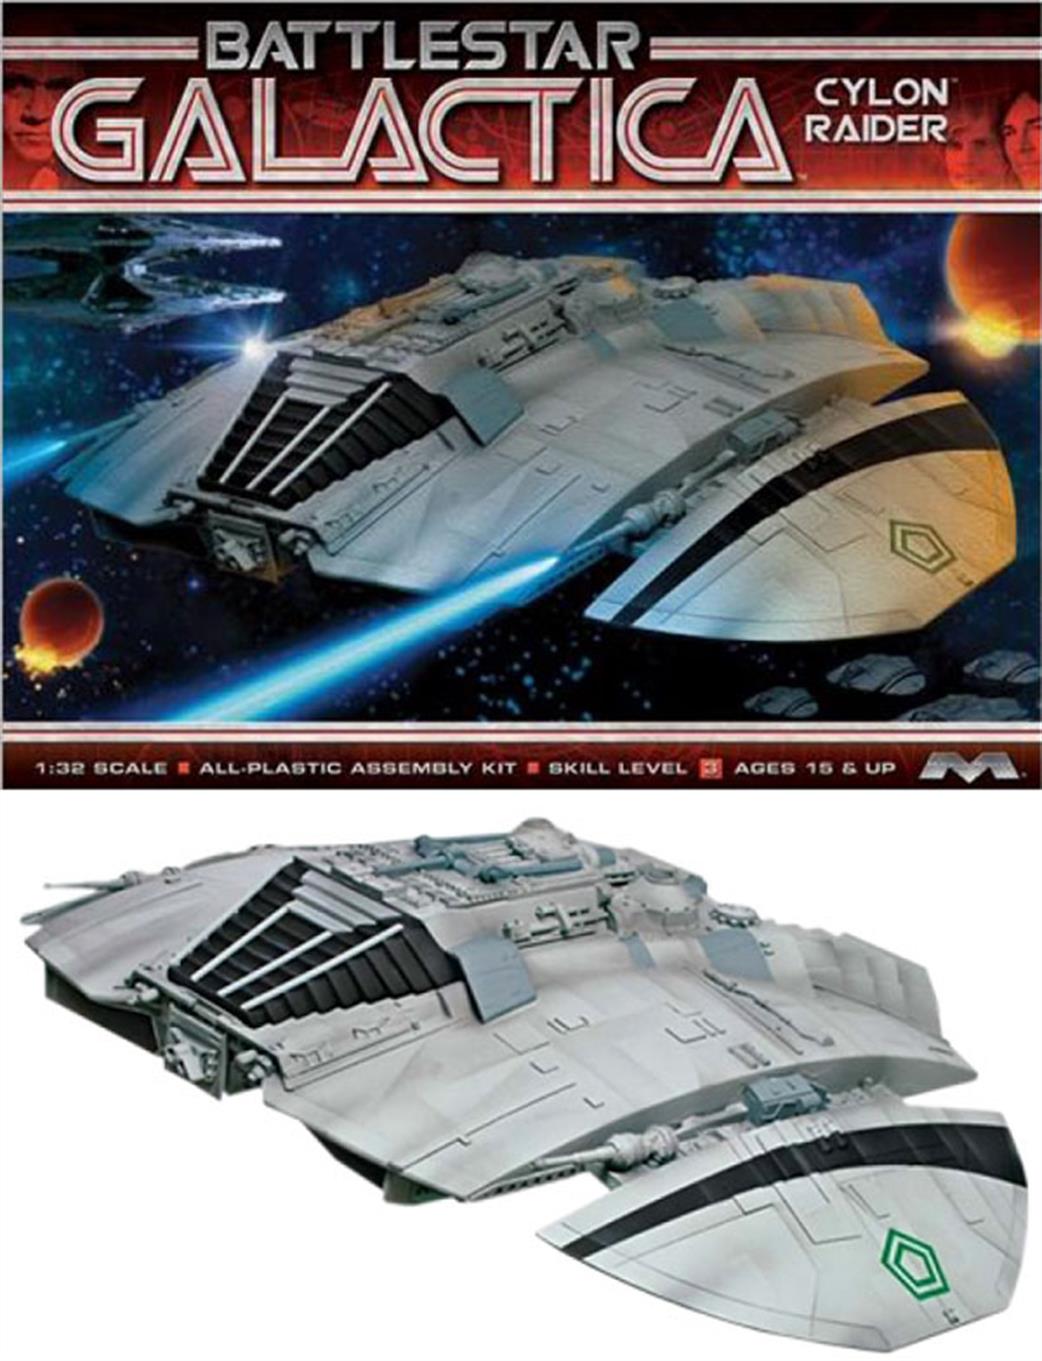 Moebius 1/32 MMK941 Cylon Raider Battlestar Galactica Classic Series 1 Kit